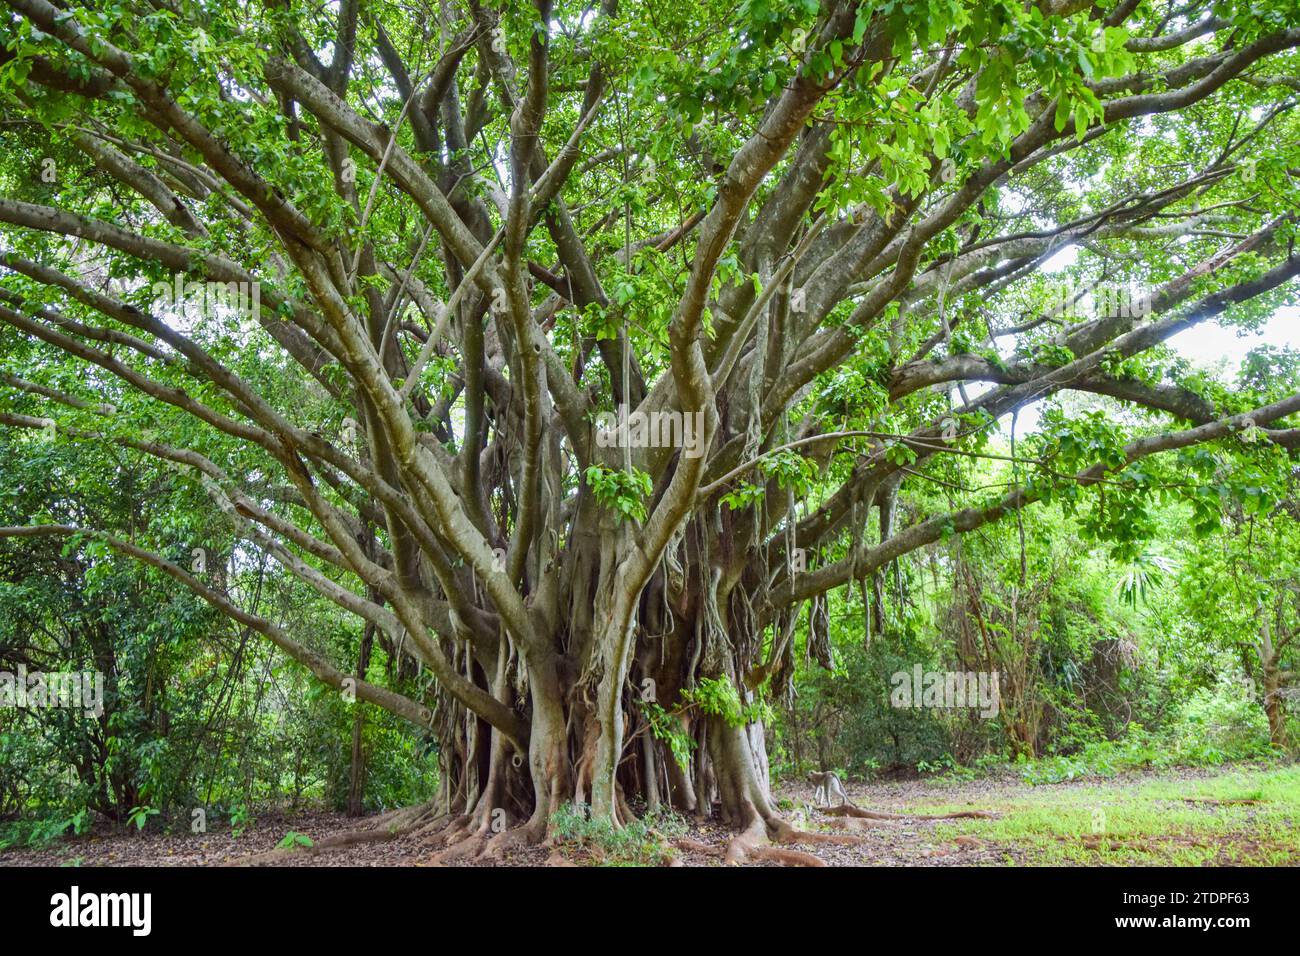 Ficus chirindensis fig tree in Zimbabwe. Credit: Vuk Valcic/Alamy Stock Photo